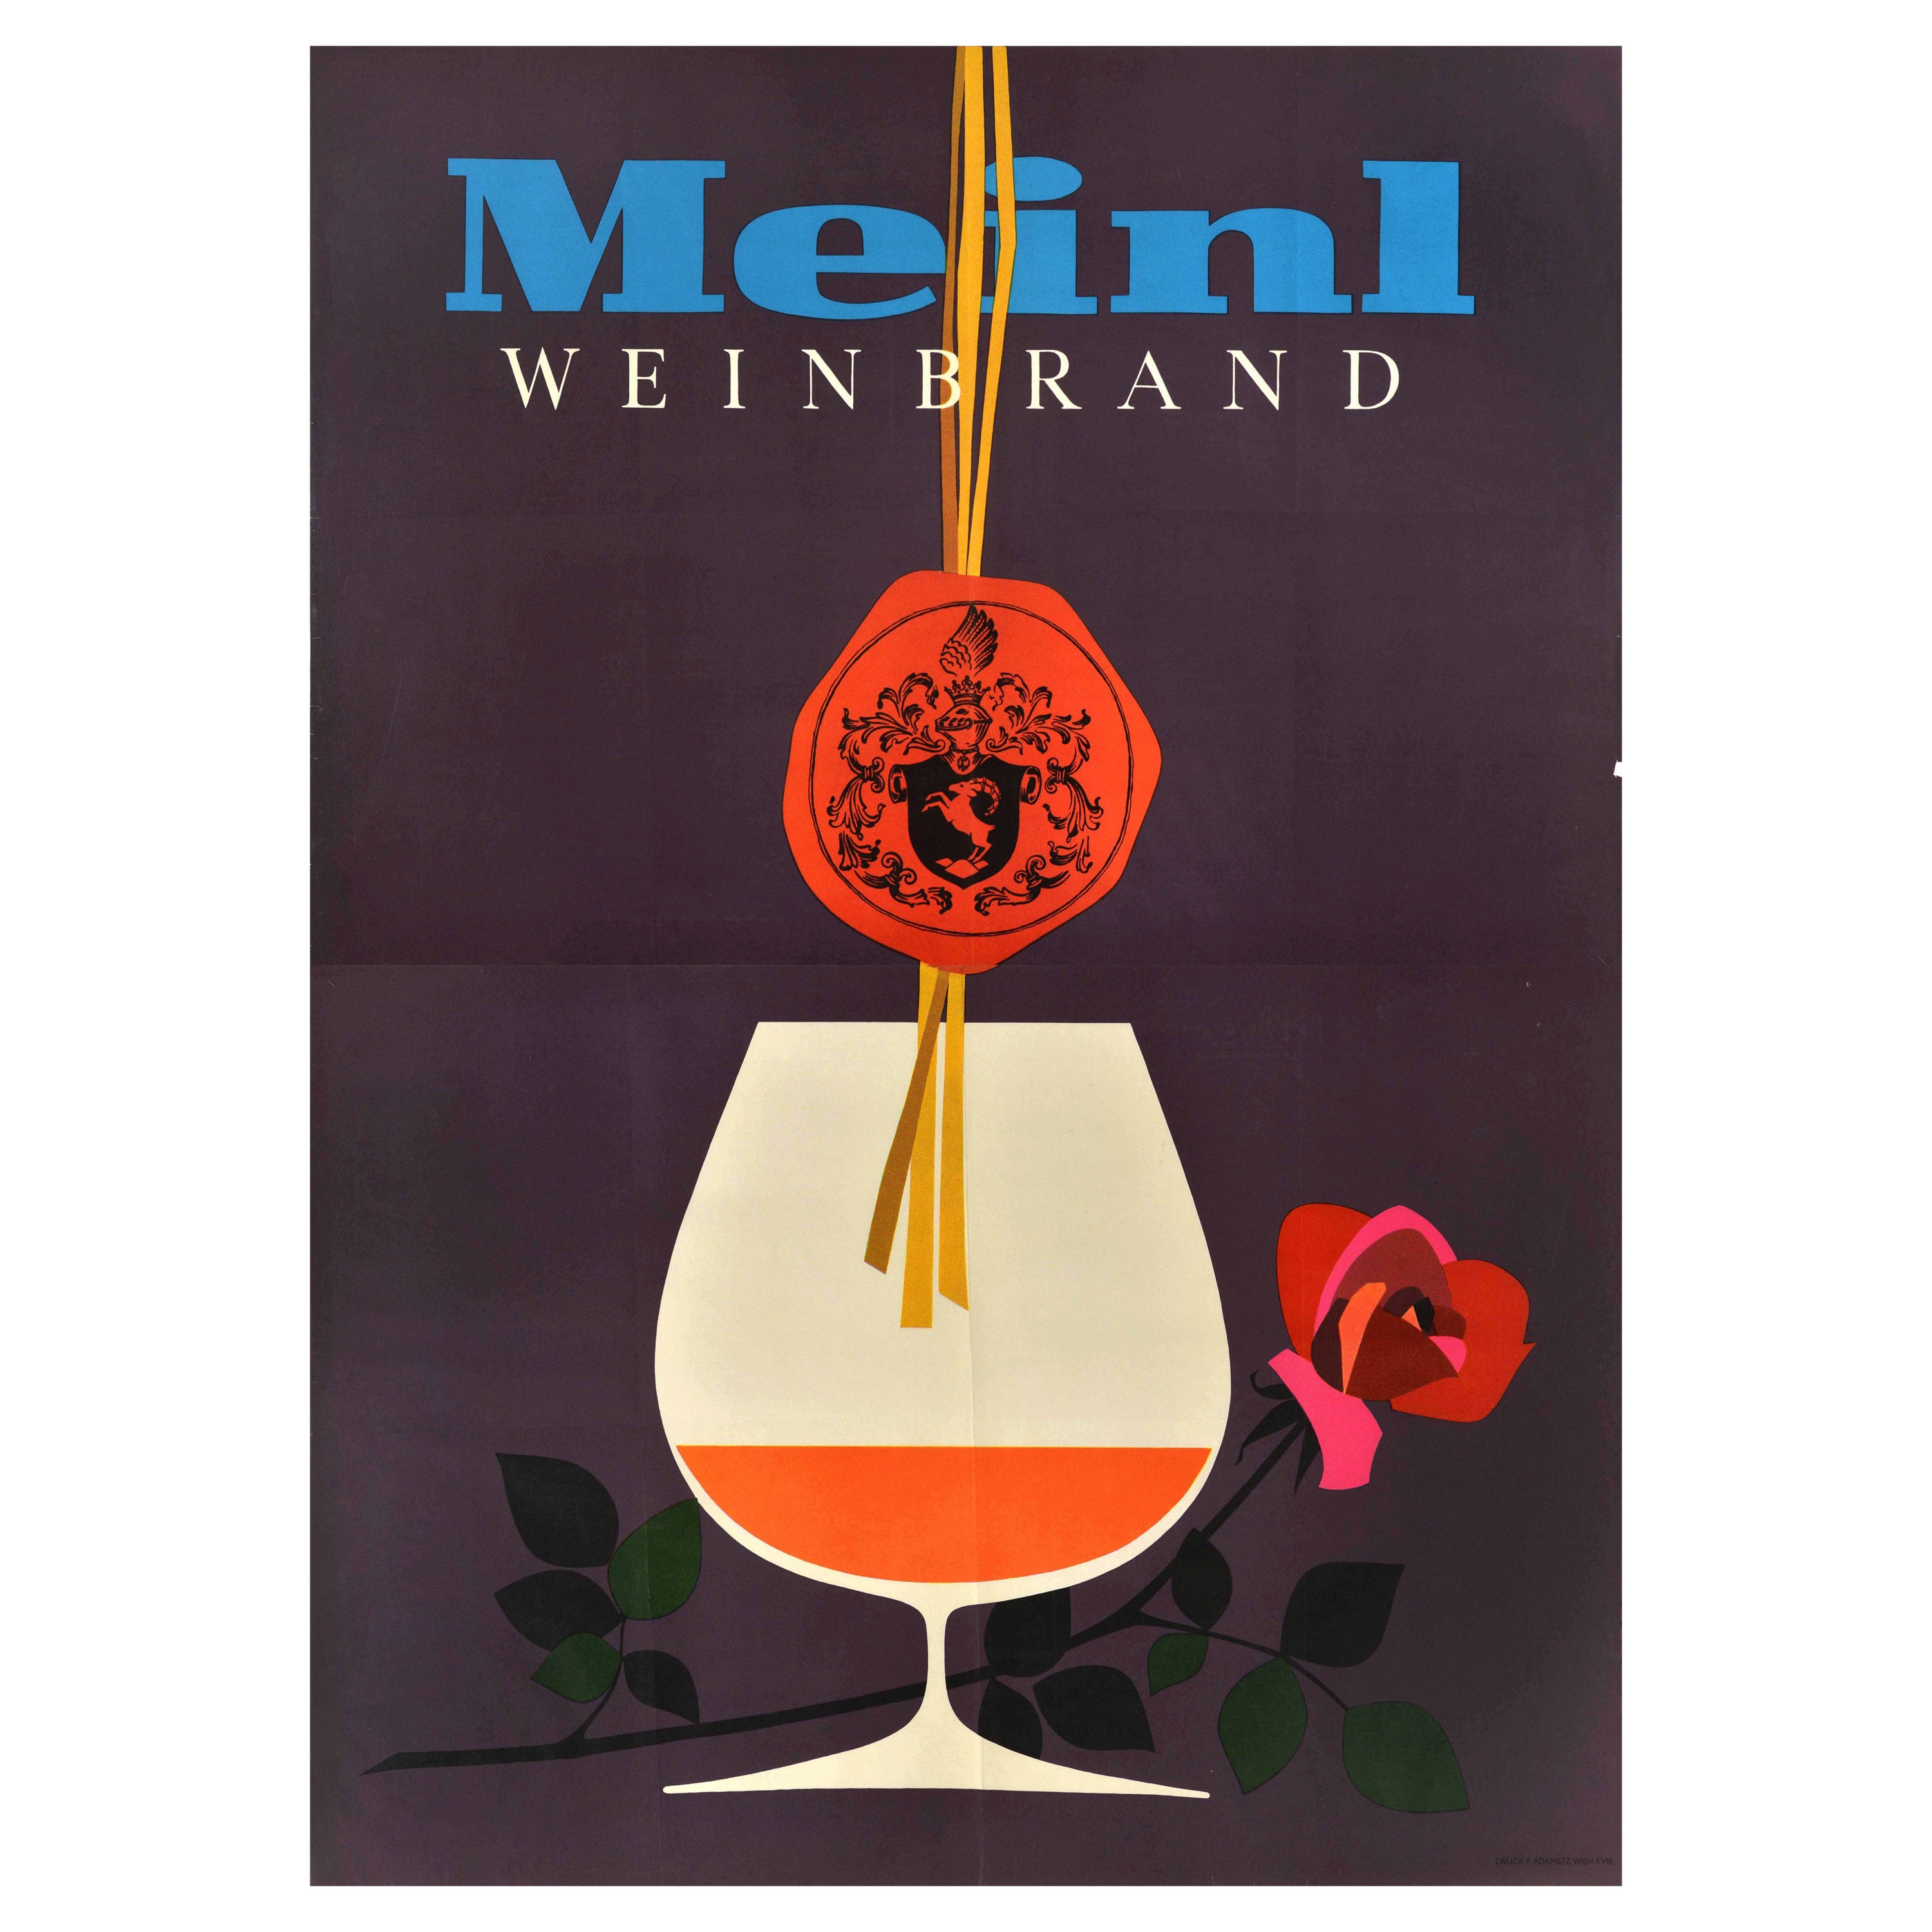 Original-Vintage-Werbeplakat Meinl Weinbrand Brandy, Cognac-Alkoholz